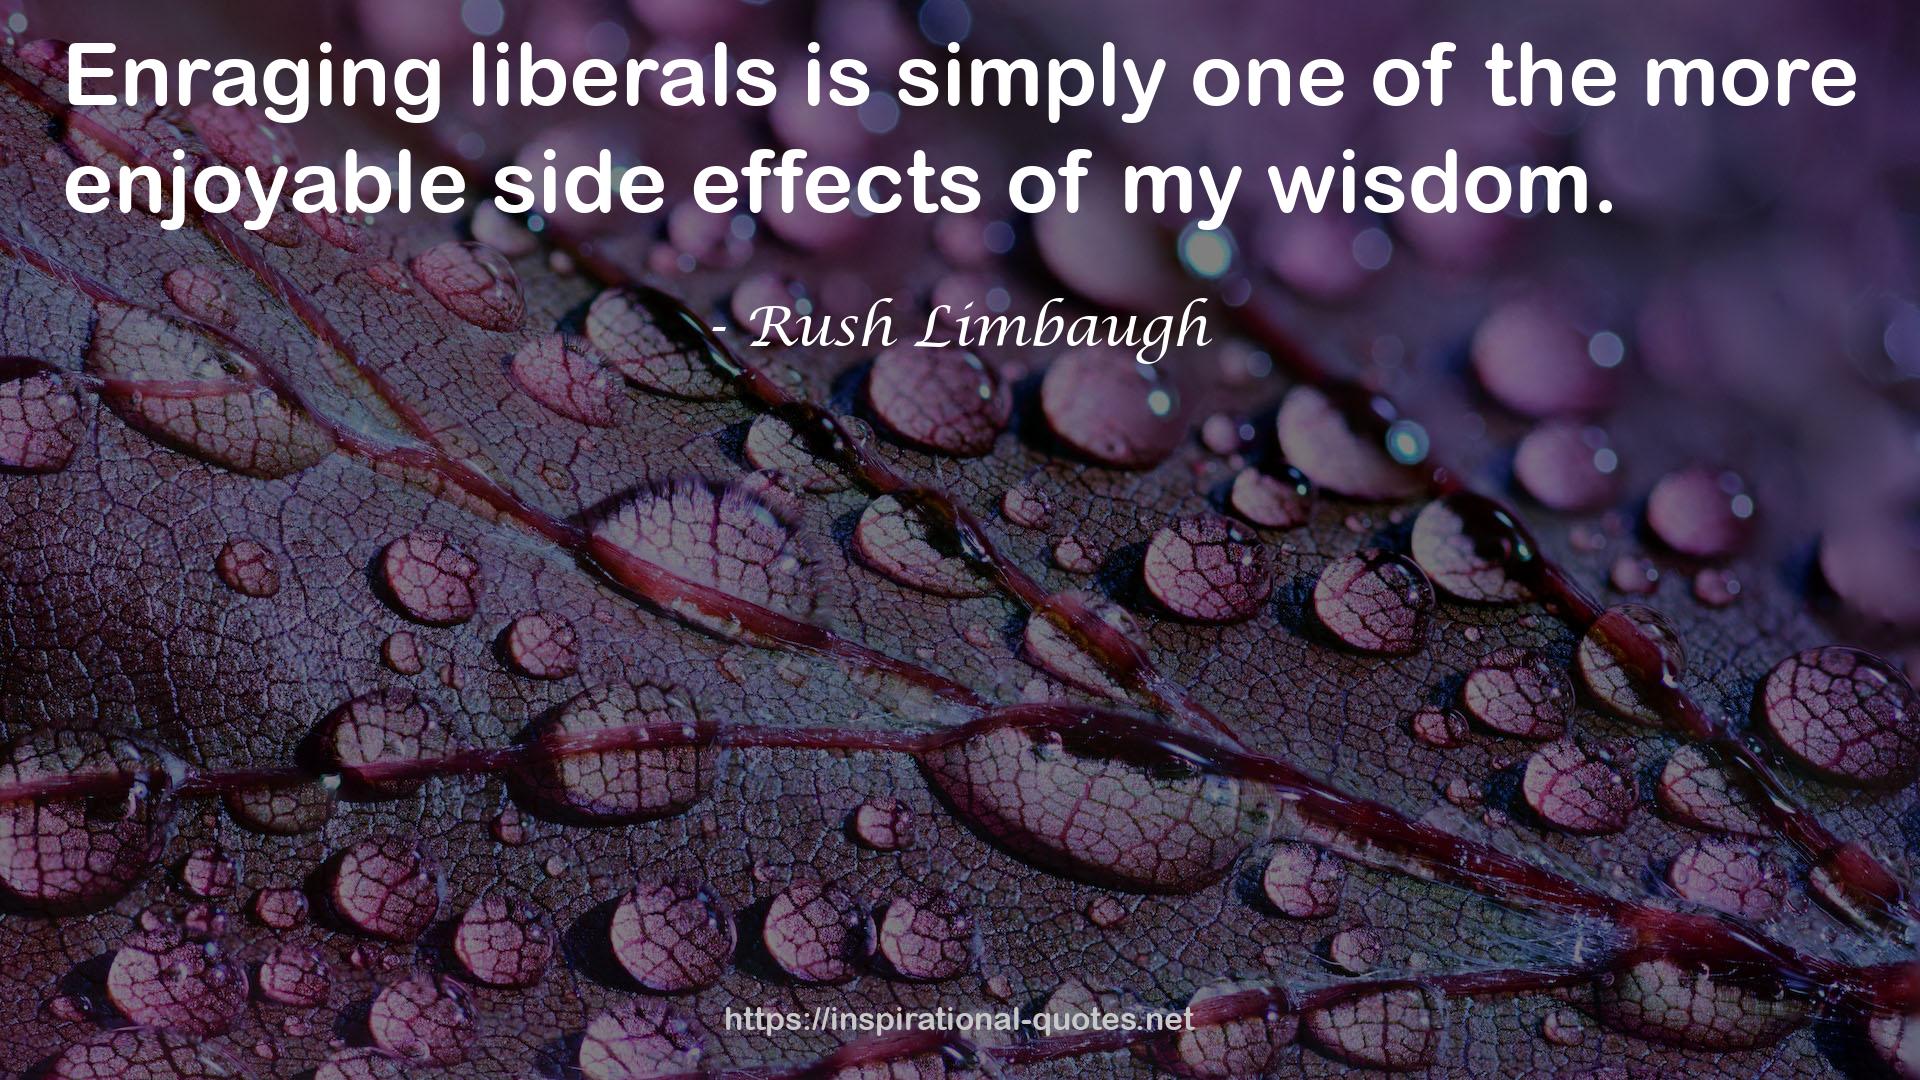 Rush Limbaugh QUOTES